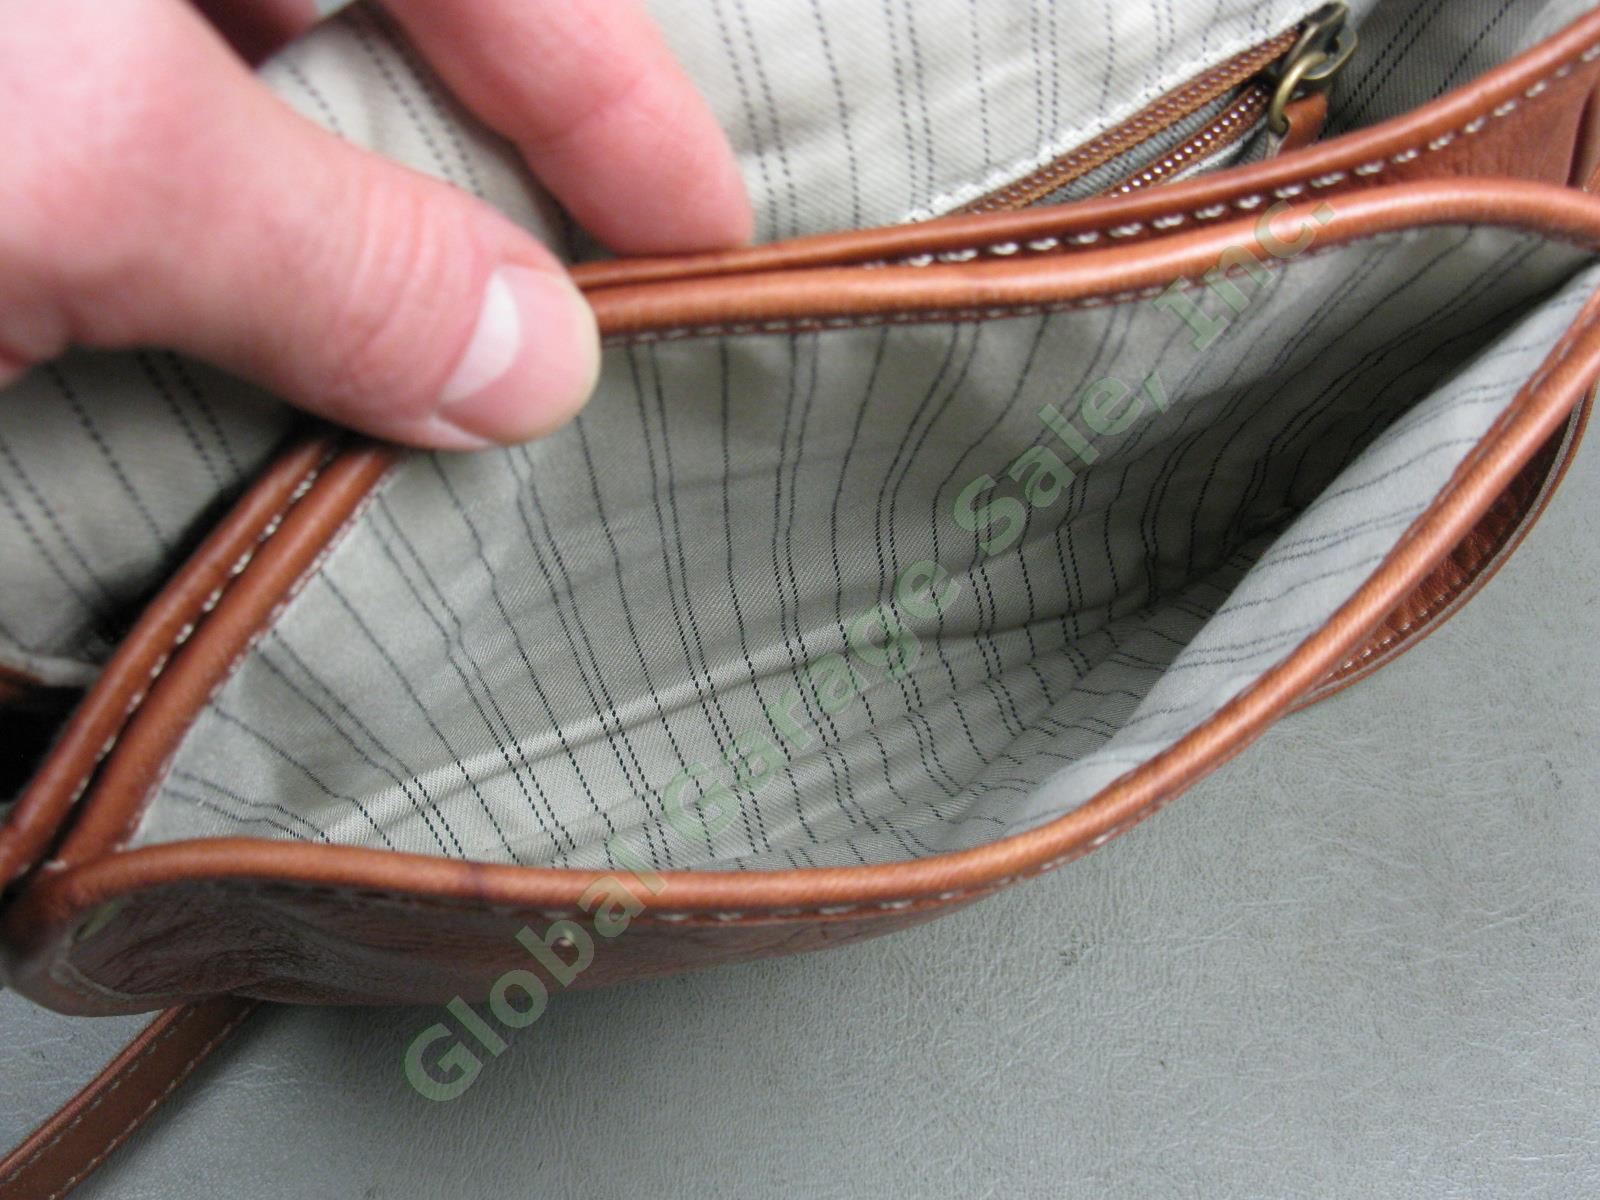 Frye Campus Saddle Cross Body Leather Handbag Clutch DB891 $298 Retail NORESERVE 6